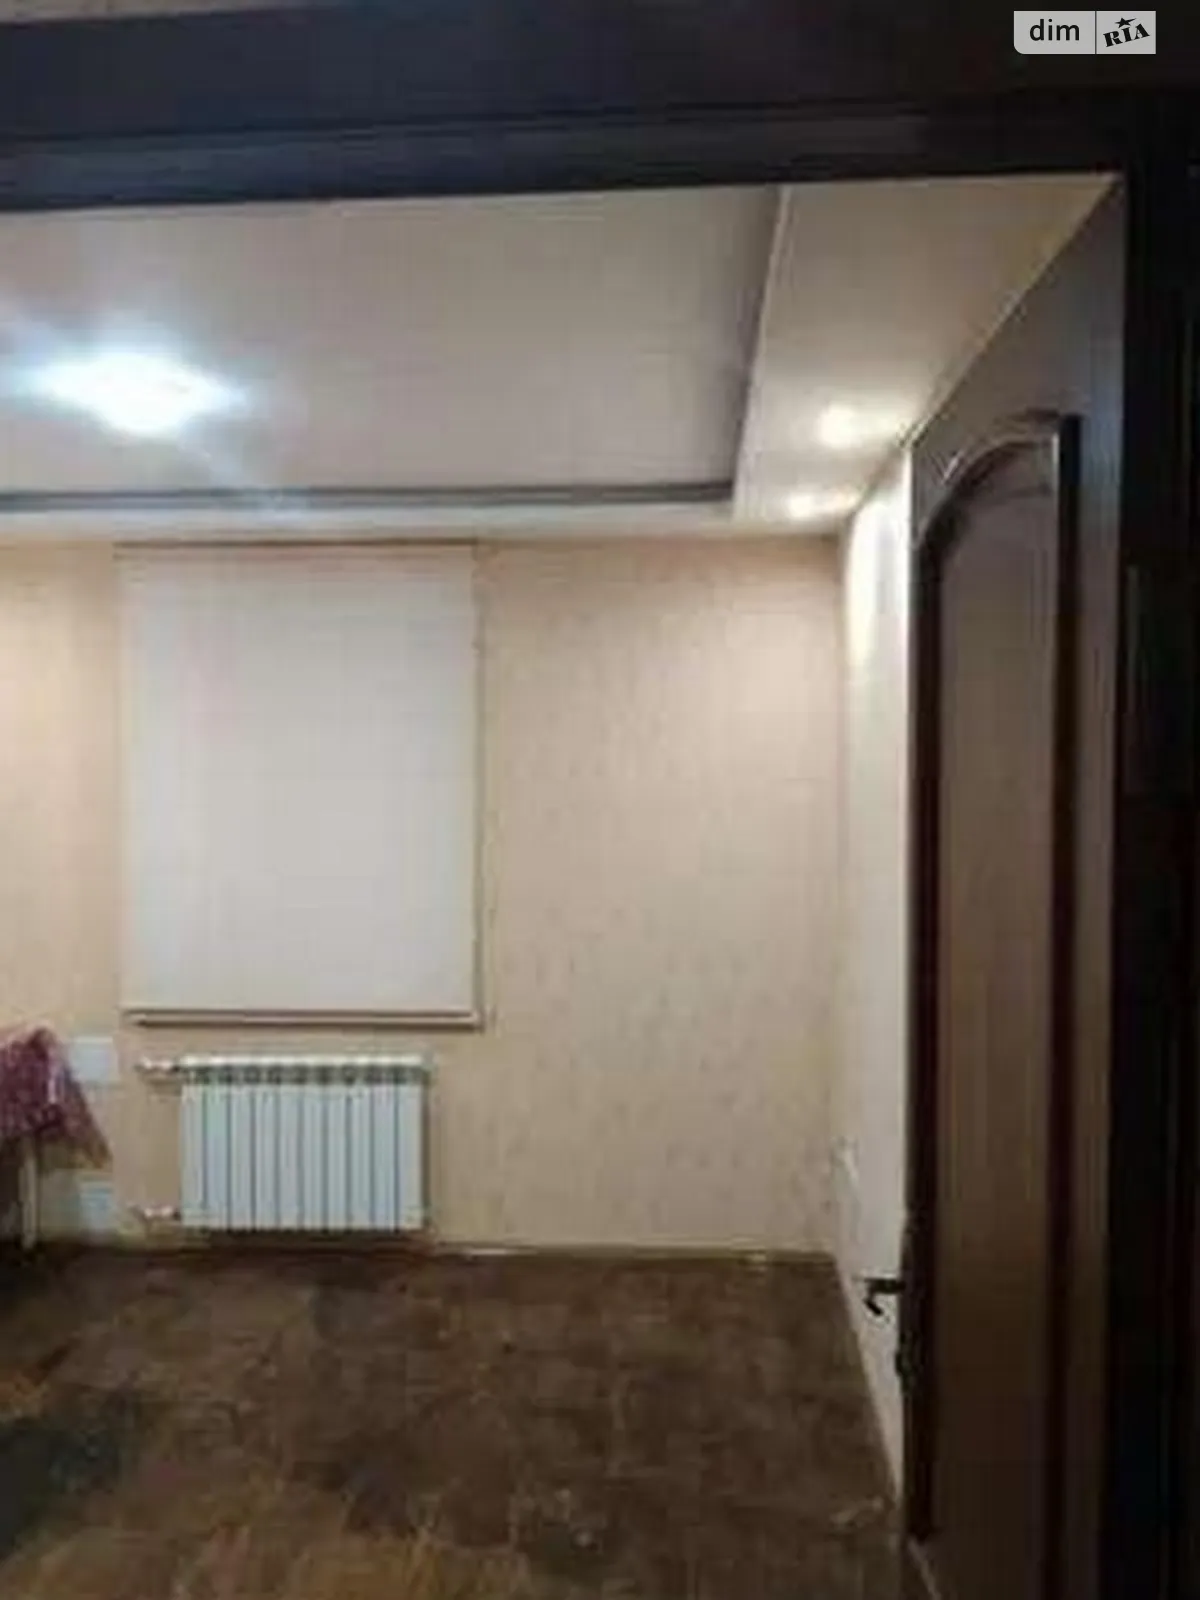 Продается комната 40 кв. м в Харькове - фото 3